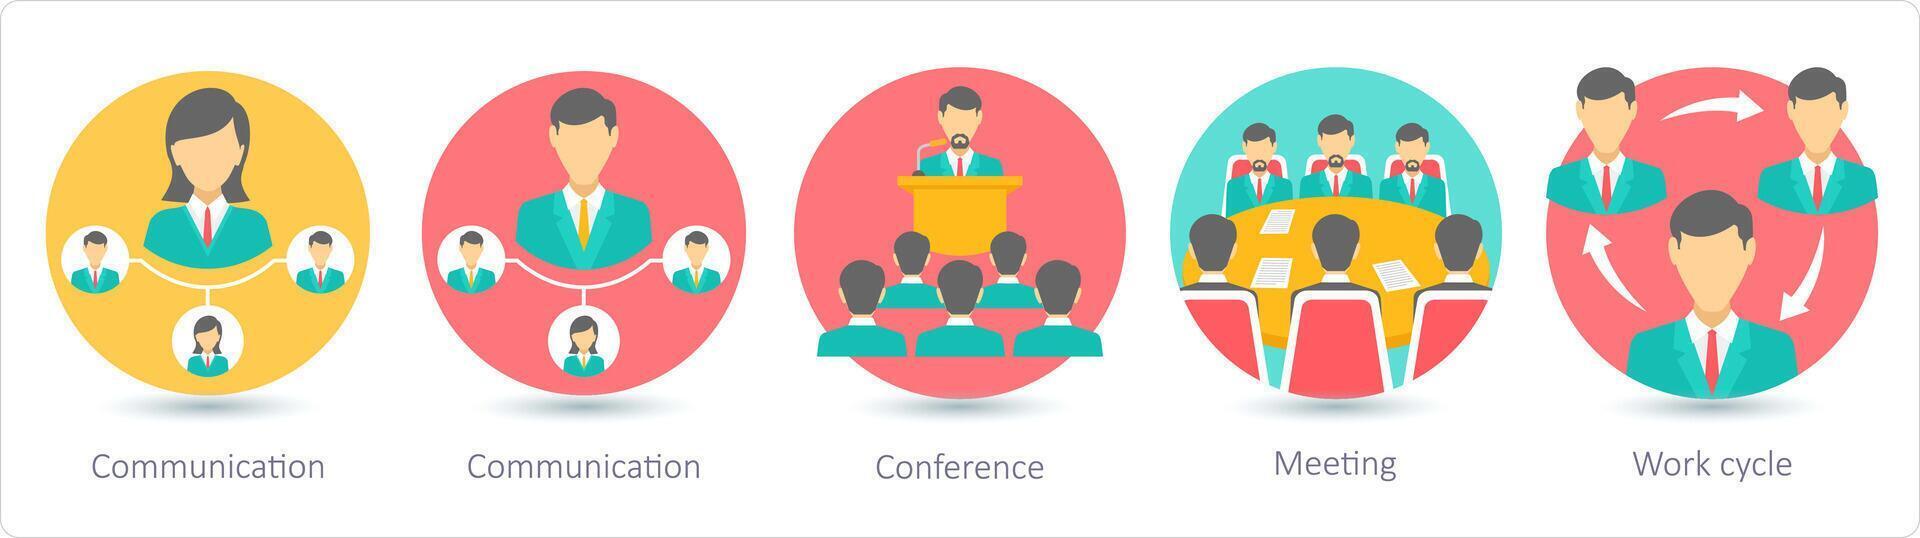 un conjunto de 5 5 negocio íconos como comunicación, conferencia, reunión vector